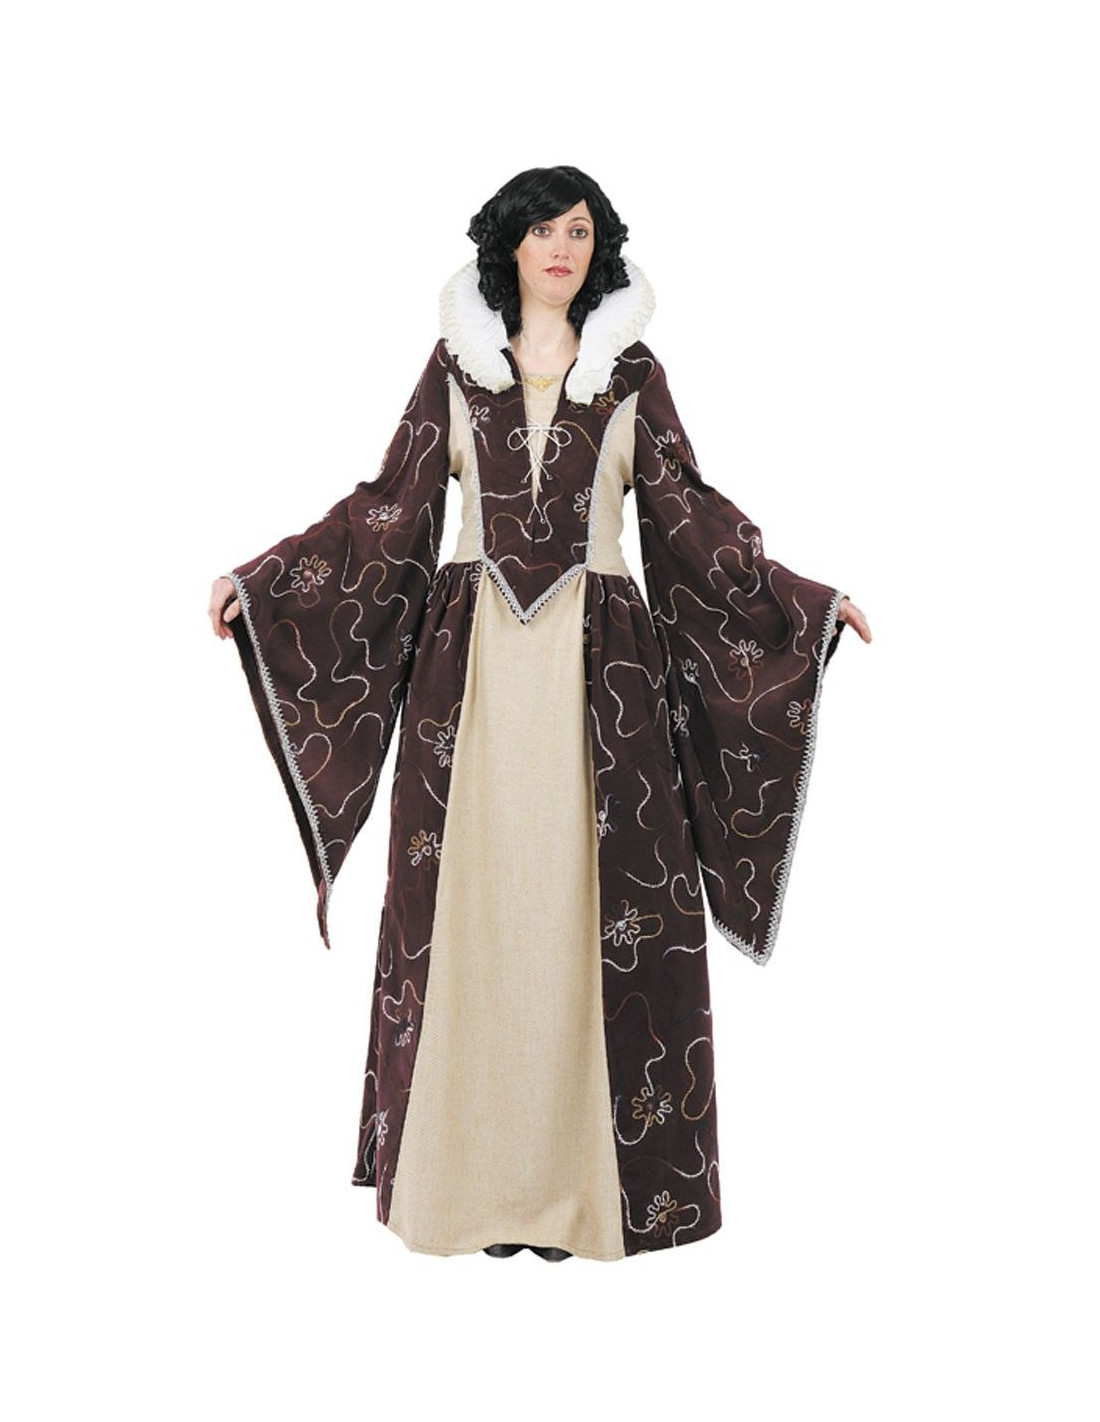 Mujer con traje medieval